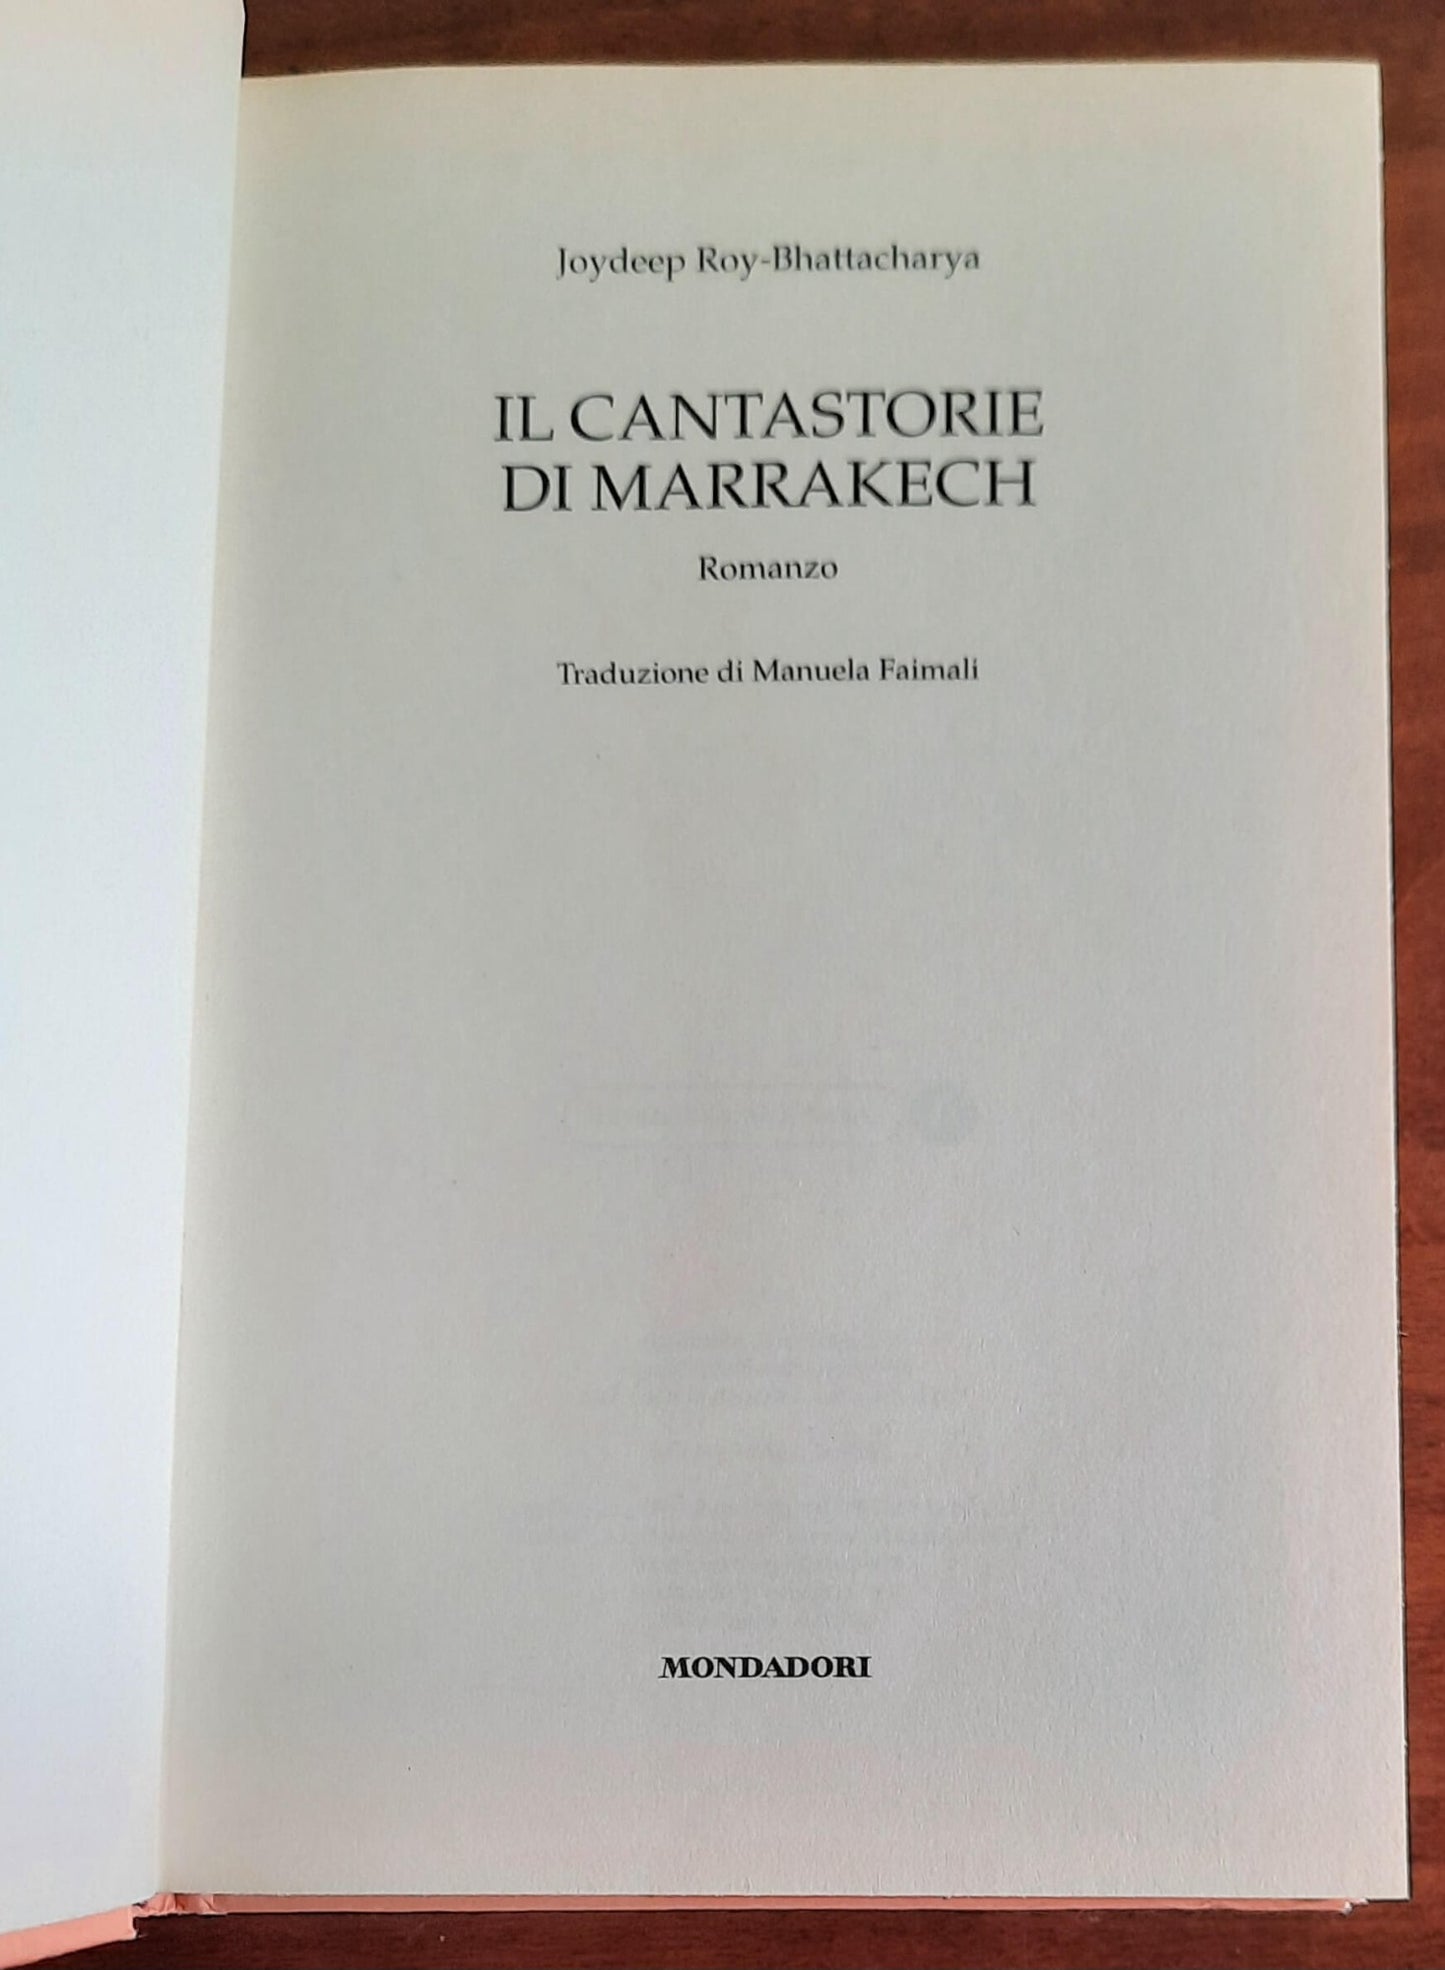 Il cantastorie di Marrakech - Mondadori